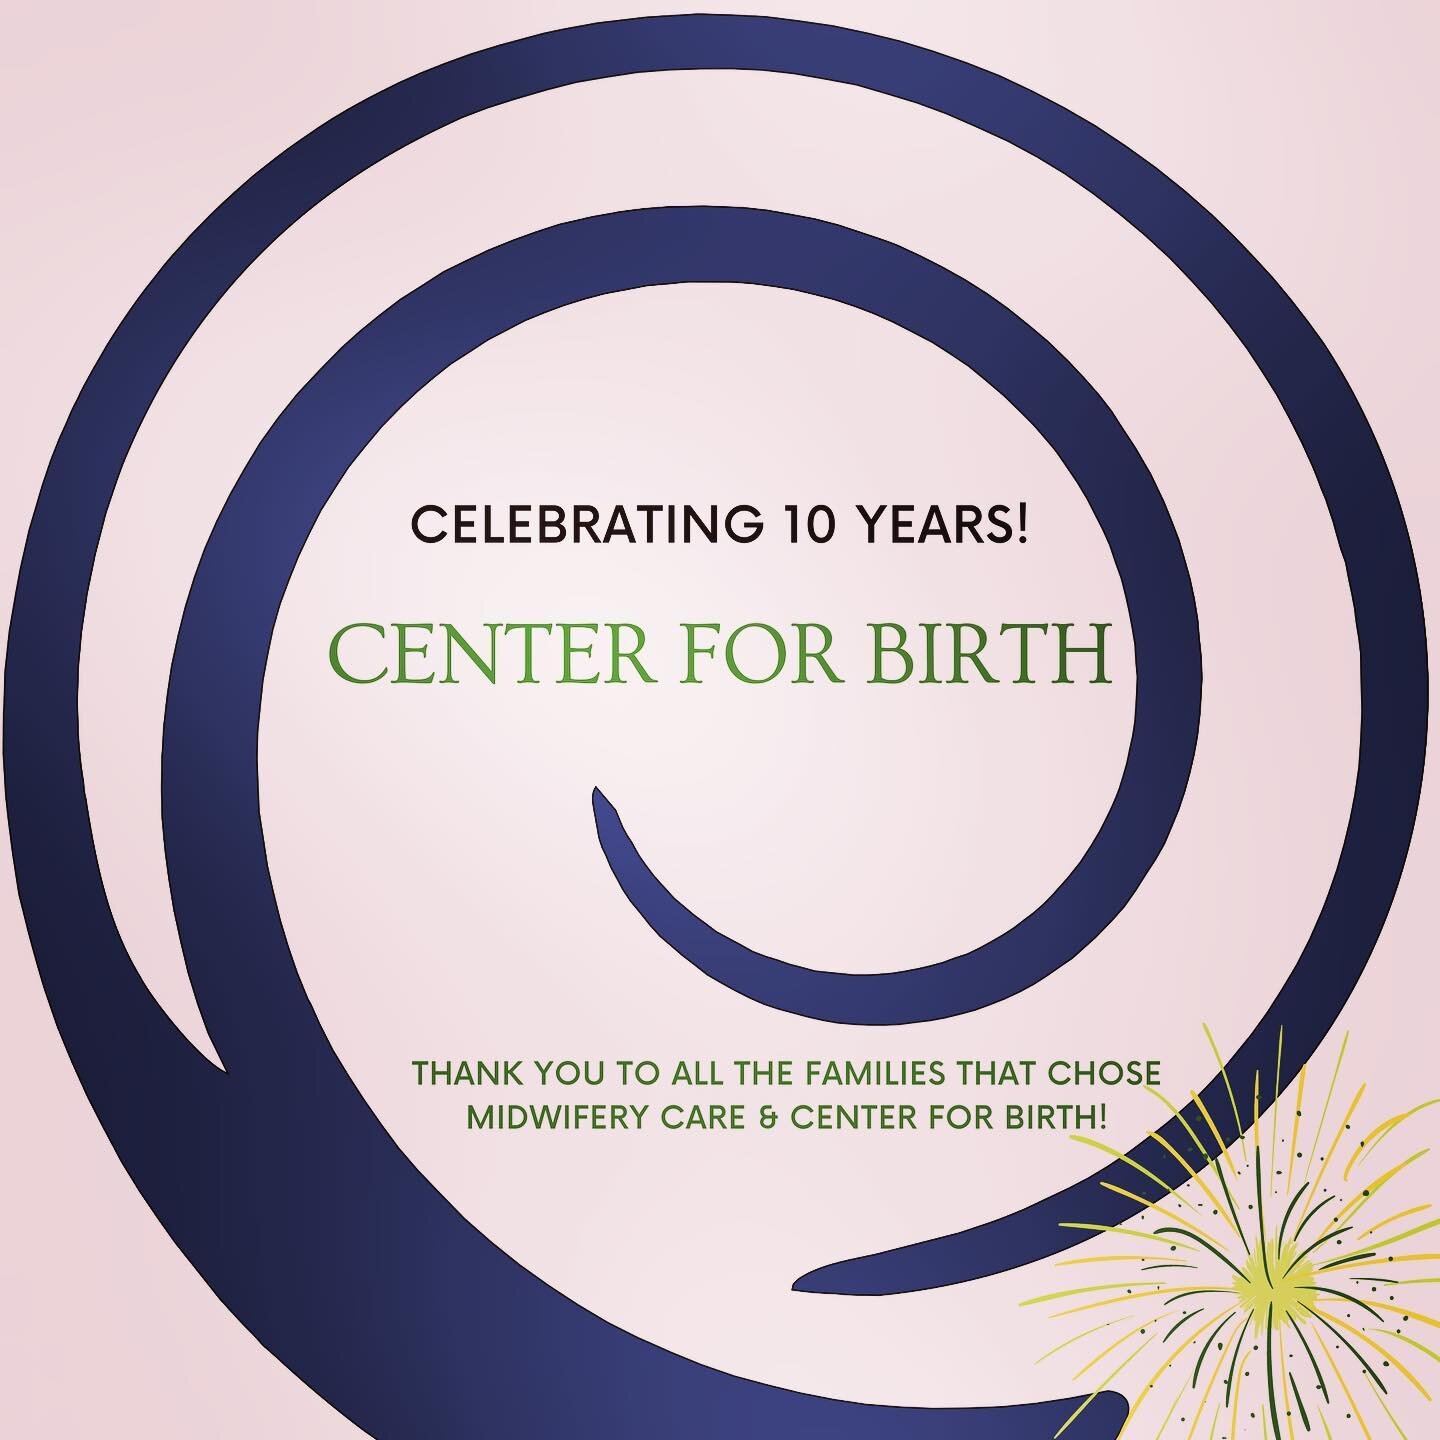 Center for Birth: Seattle's Birth Center